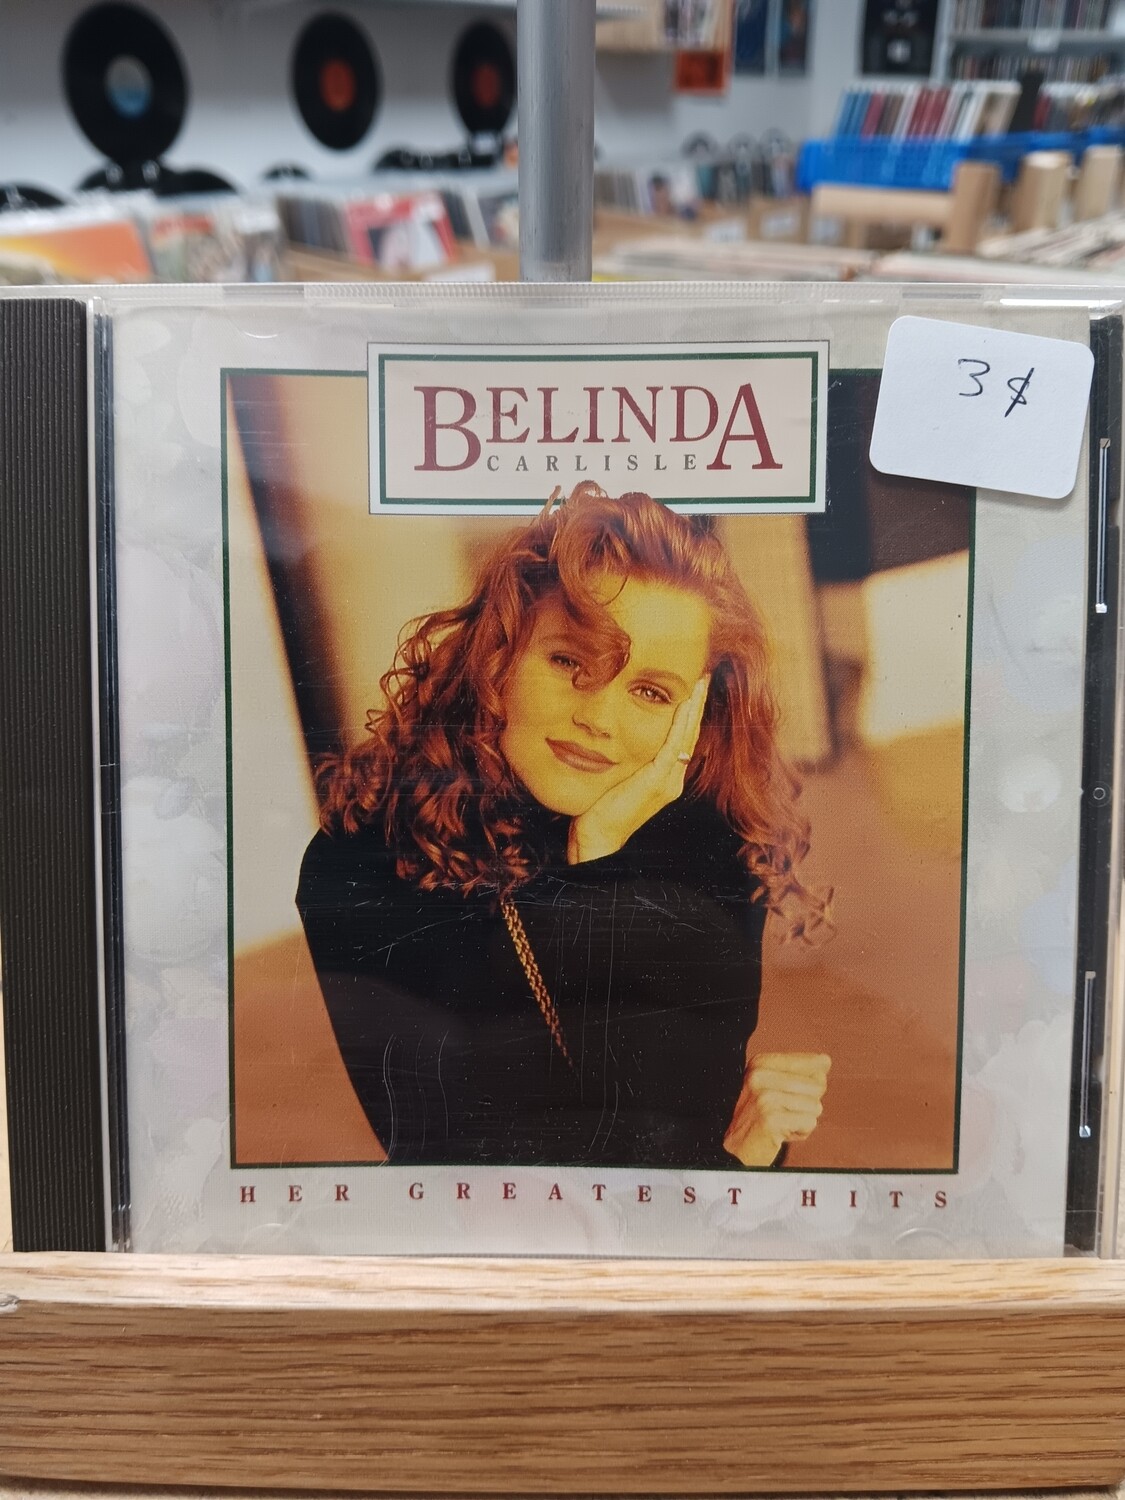 BELINDA CARLISLE - Her Greatest hits (CD)